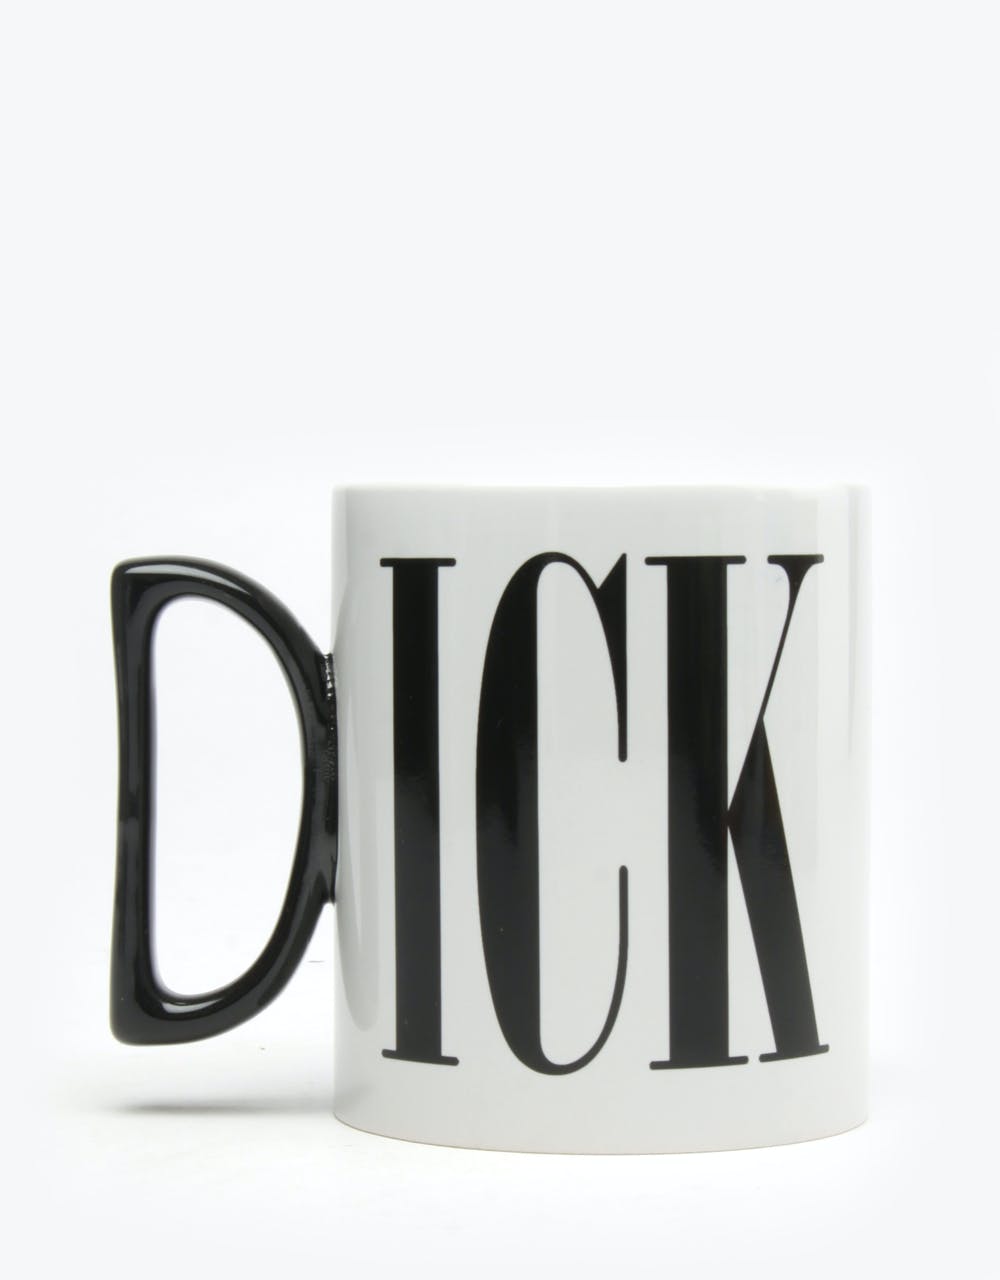 Ick Mug